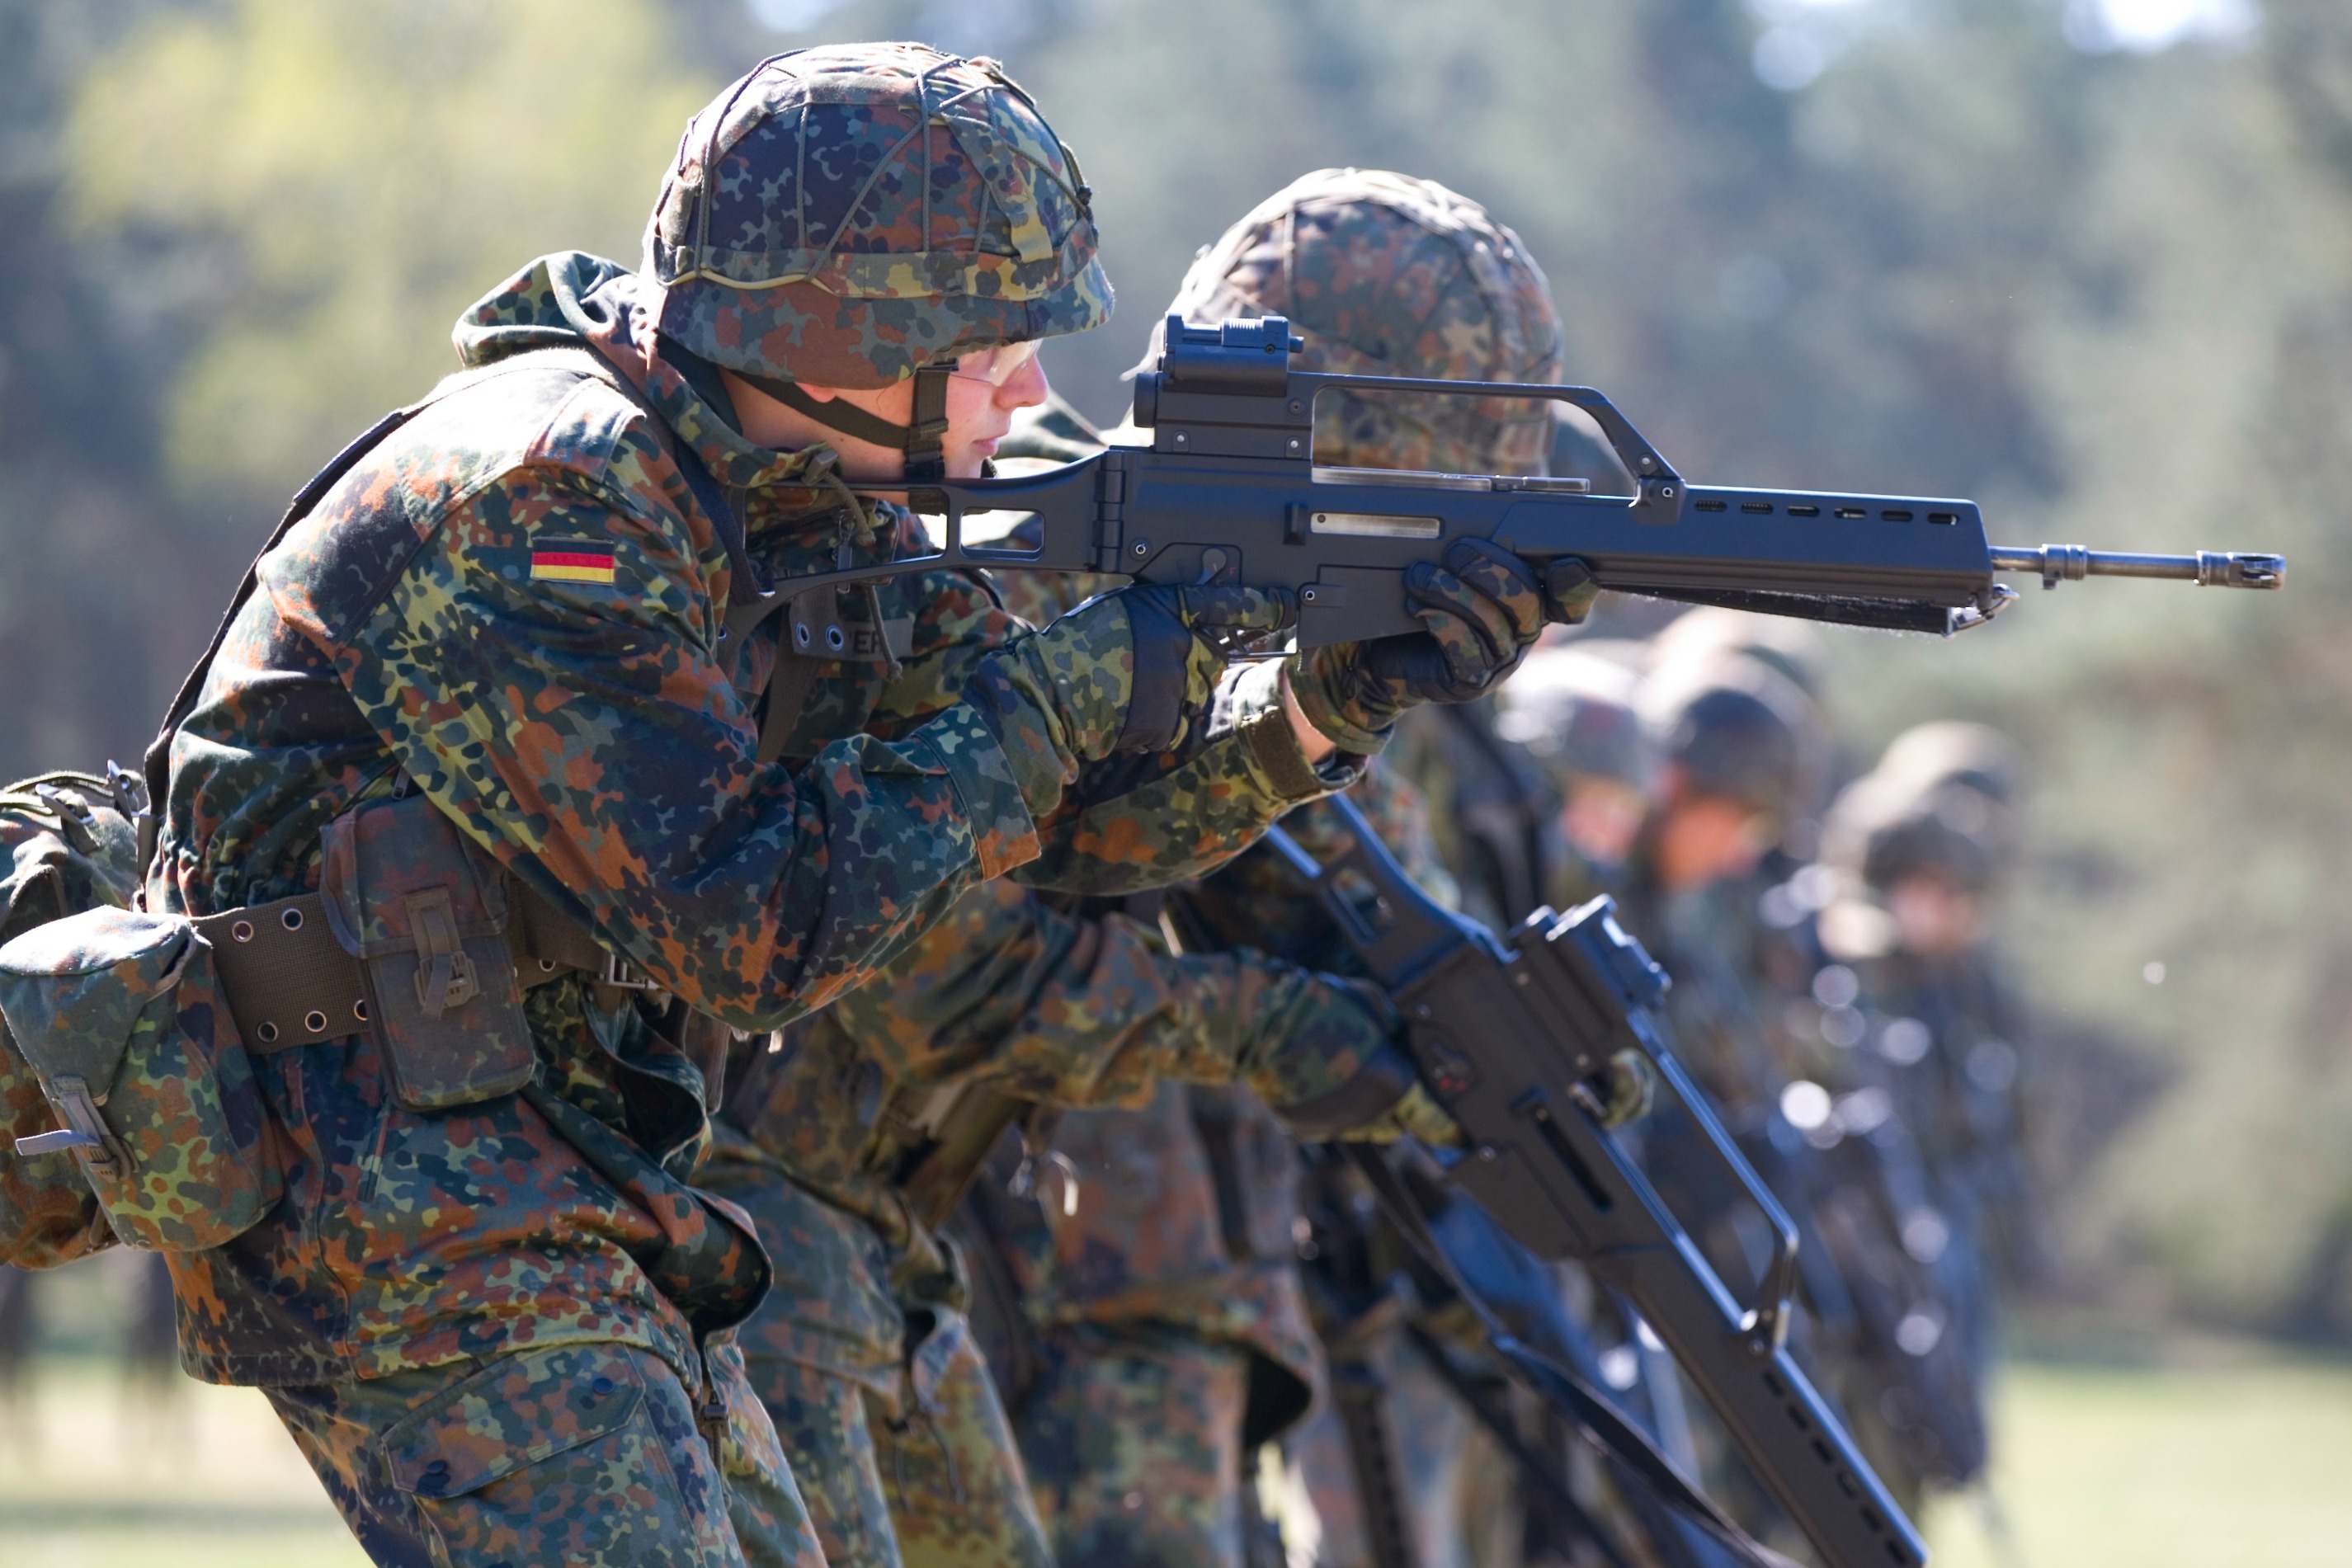 Der bundeswehr. Солдат Бундесвера с g36. G36 Бундесвер. Германская армия Бундесвер. Бундесвер 2020.